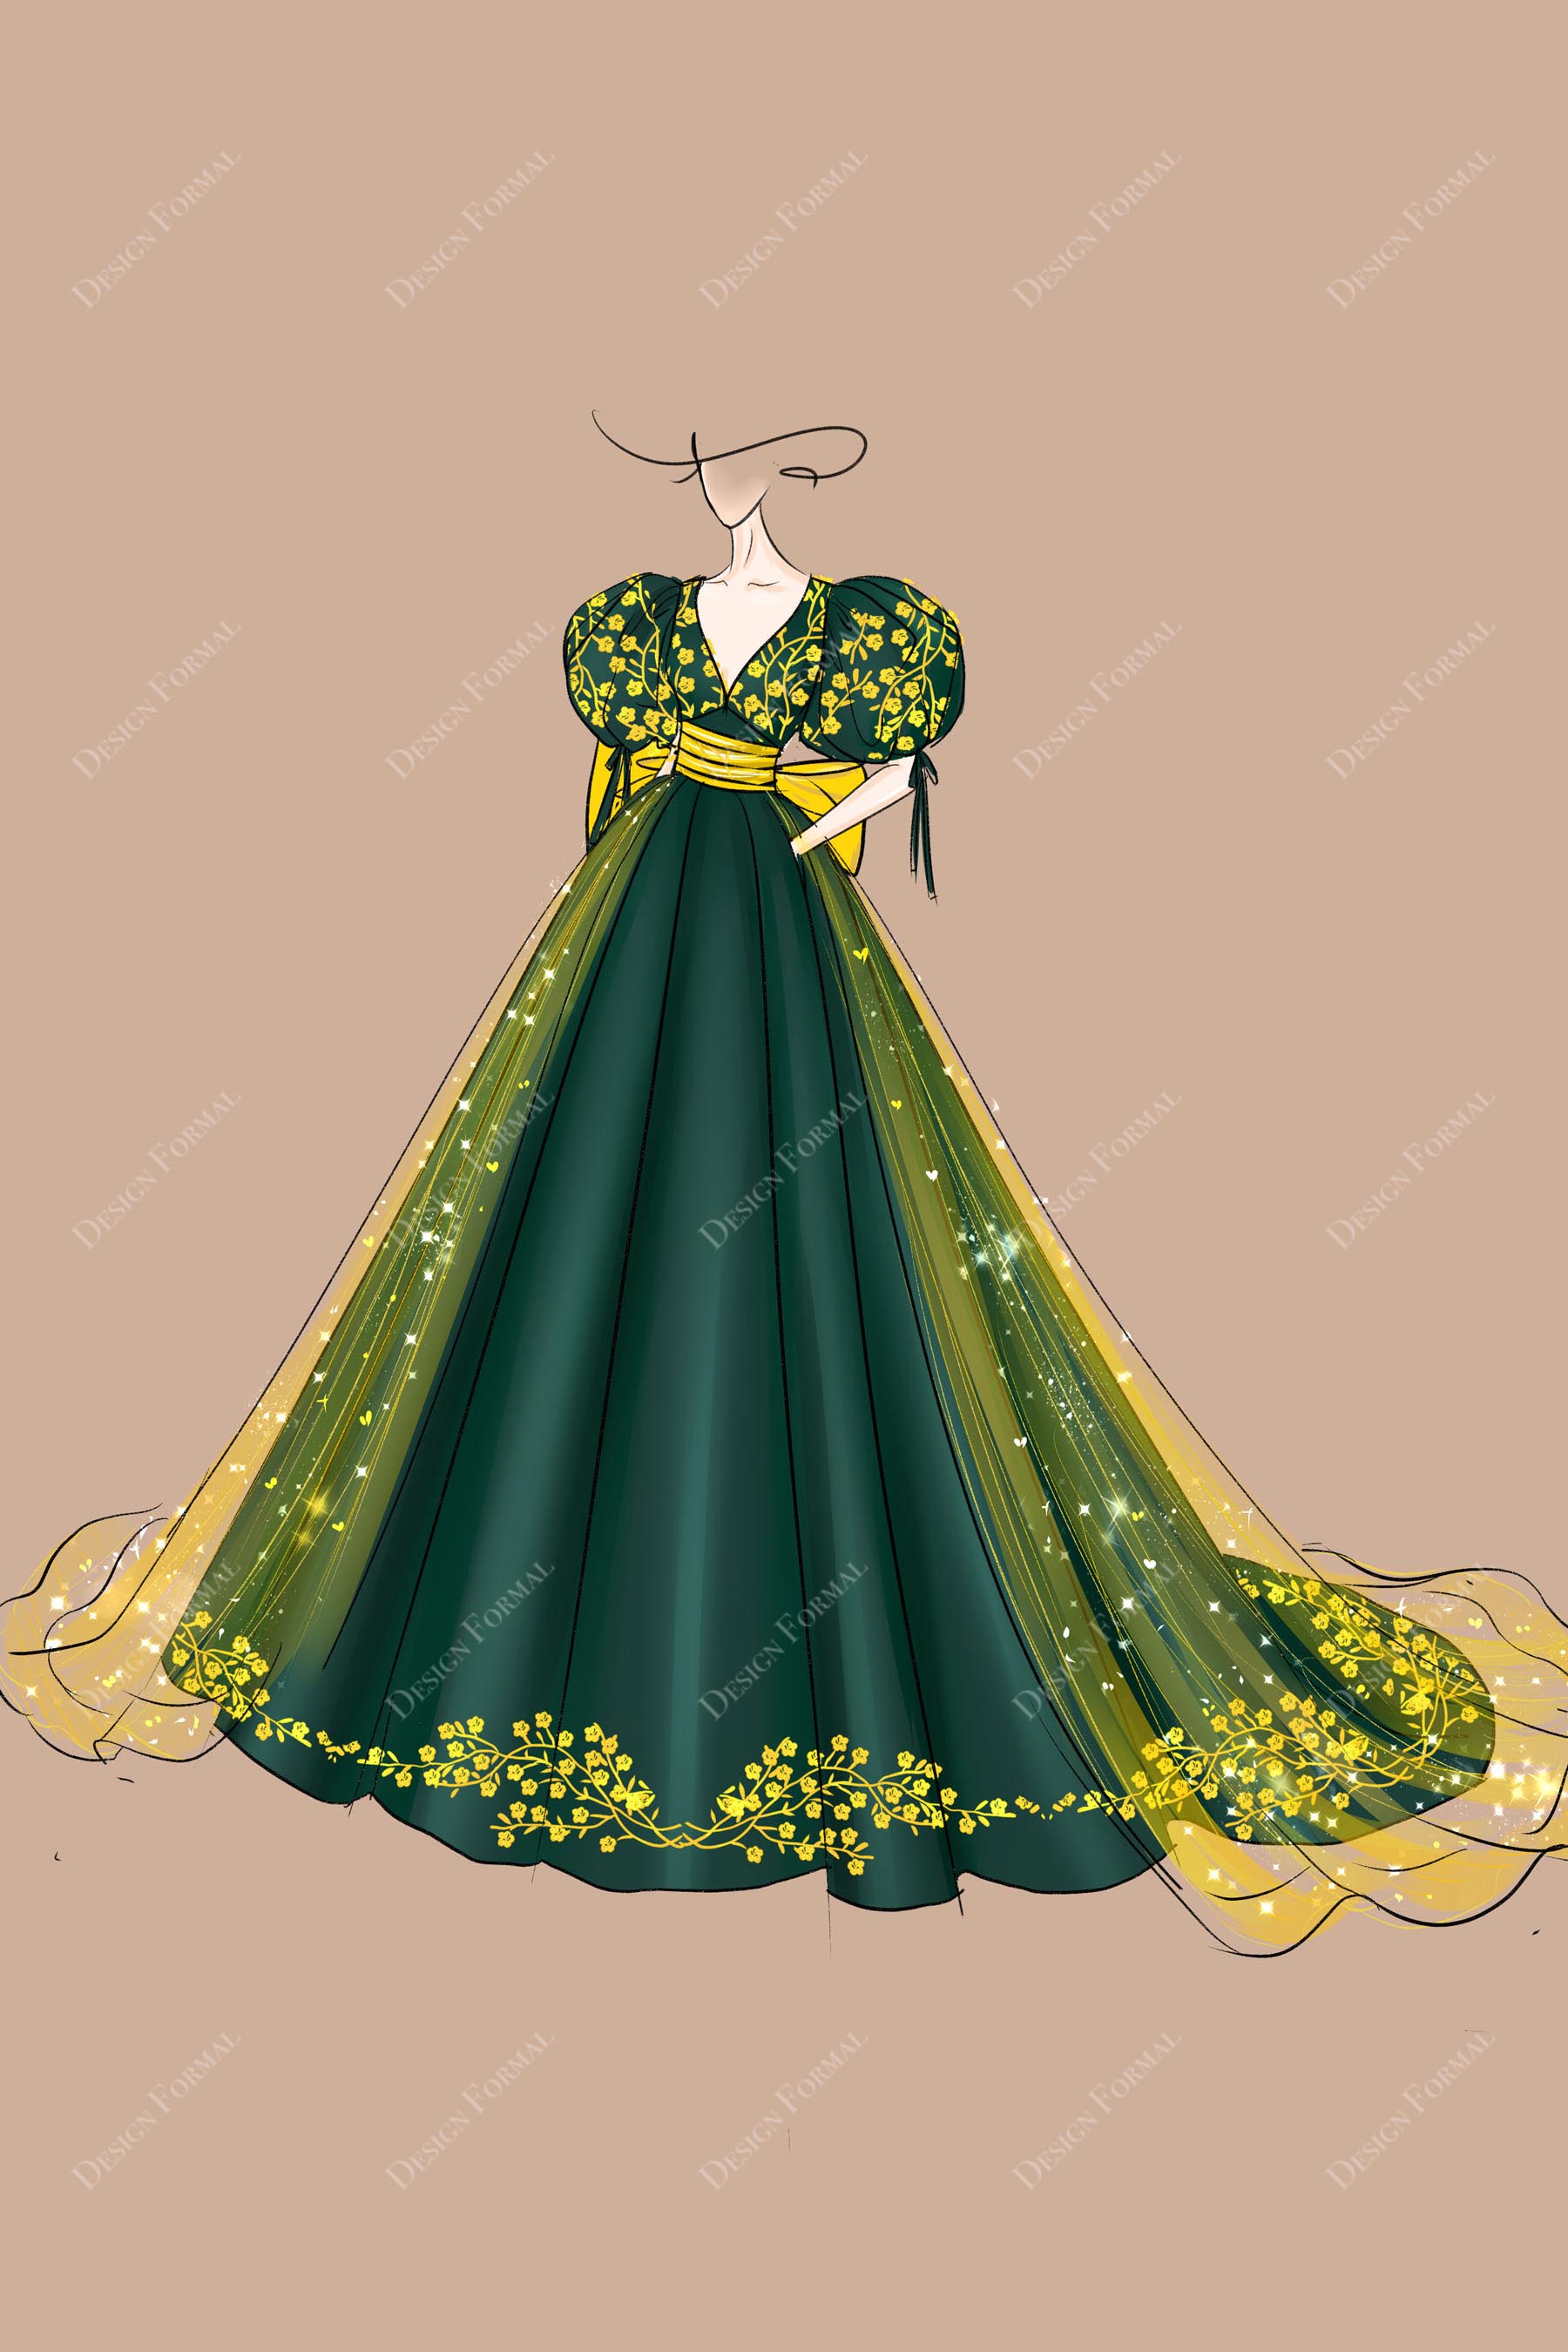 sparkly gold overskirt A-line wedding dress sketch